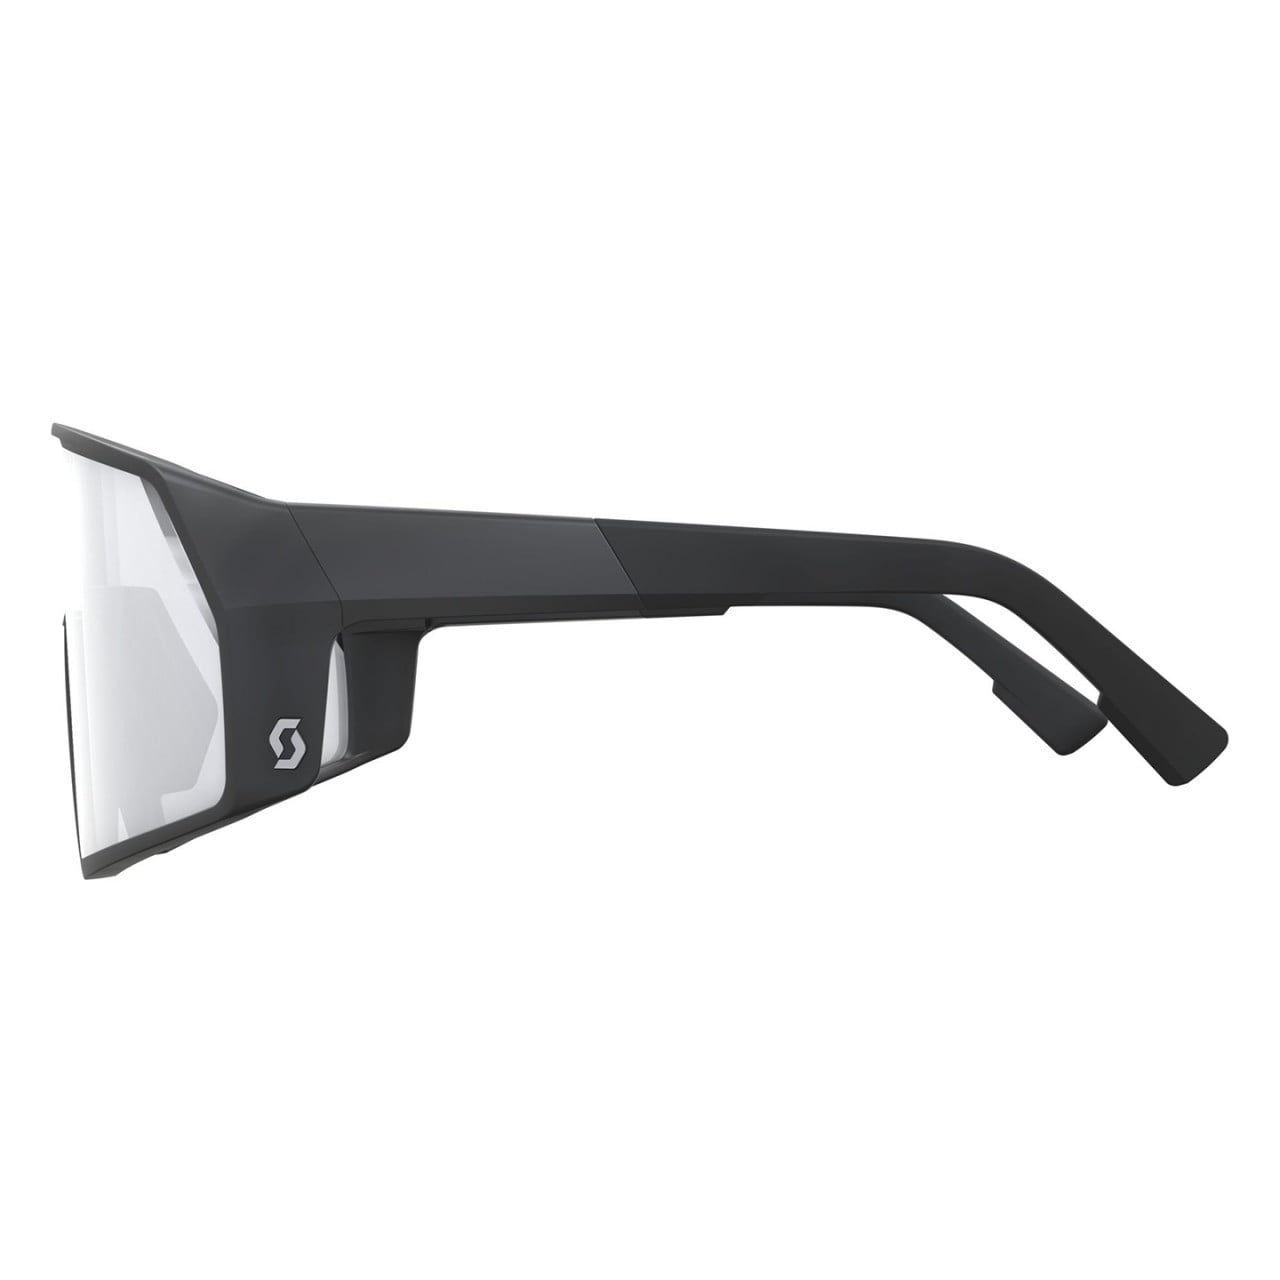 Radsportbrille Pro Shield 2024